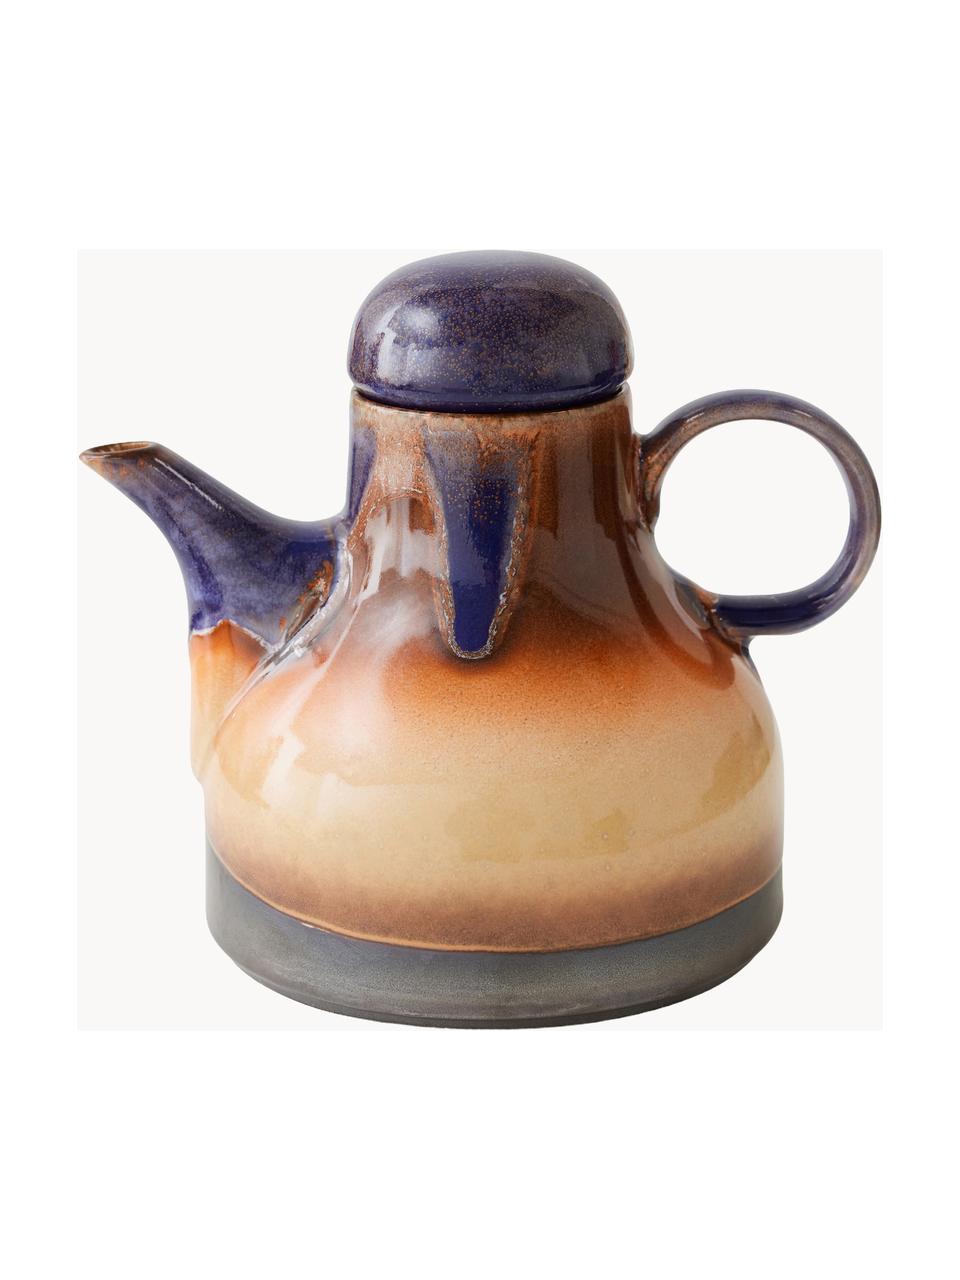 Teiera in ceramica fatta a mano 70's, 990 ml, Ceramica, Tonalità marroni, blu scuro, 990 ml